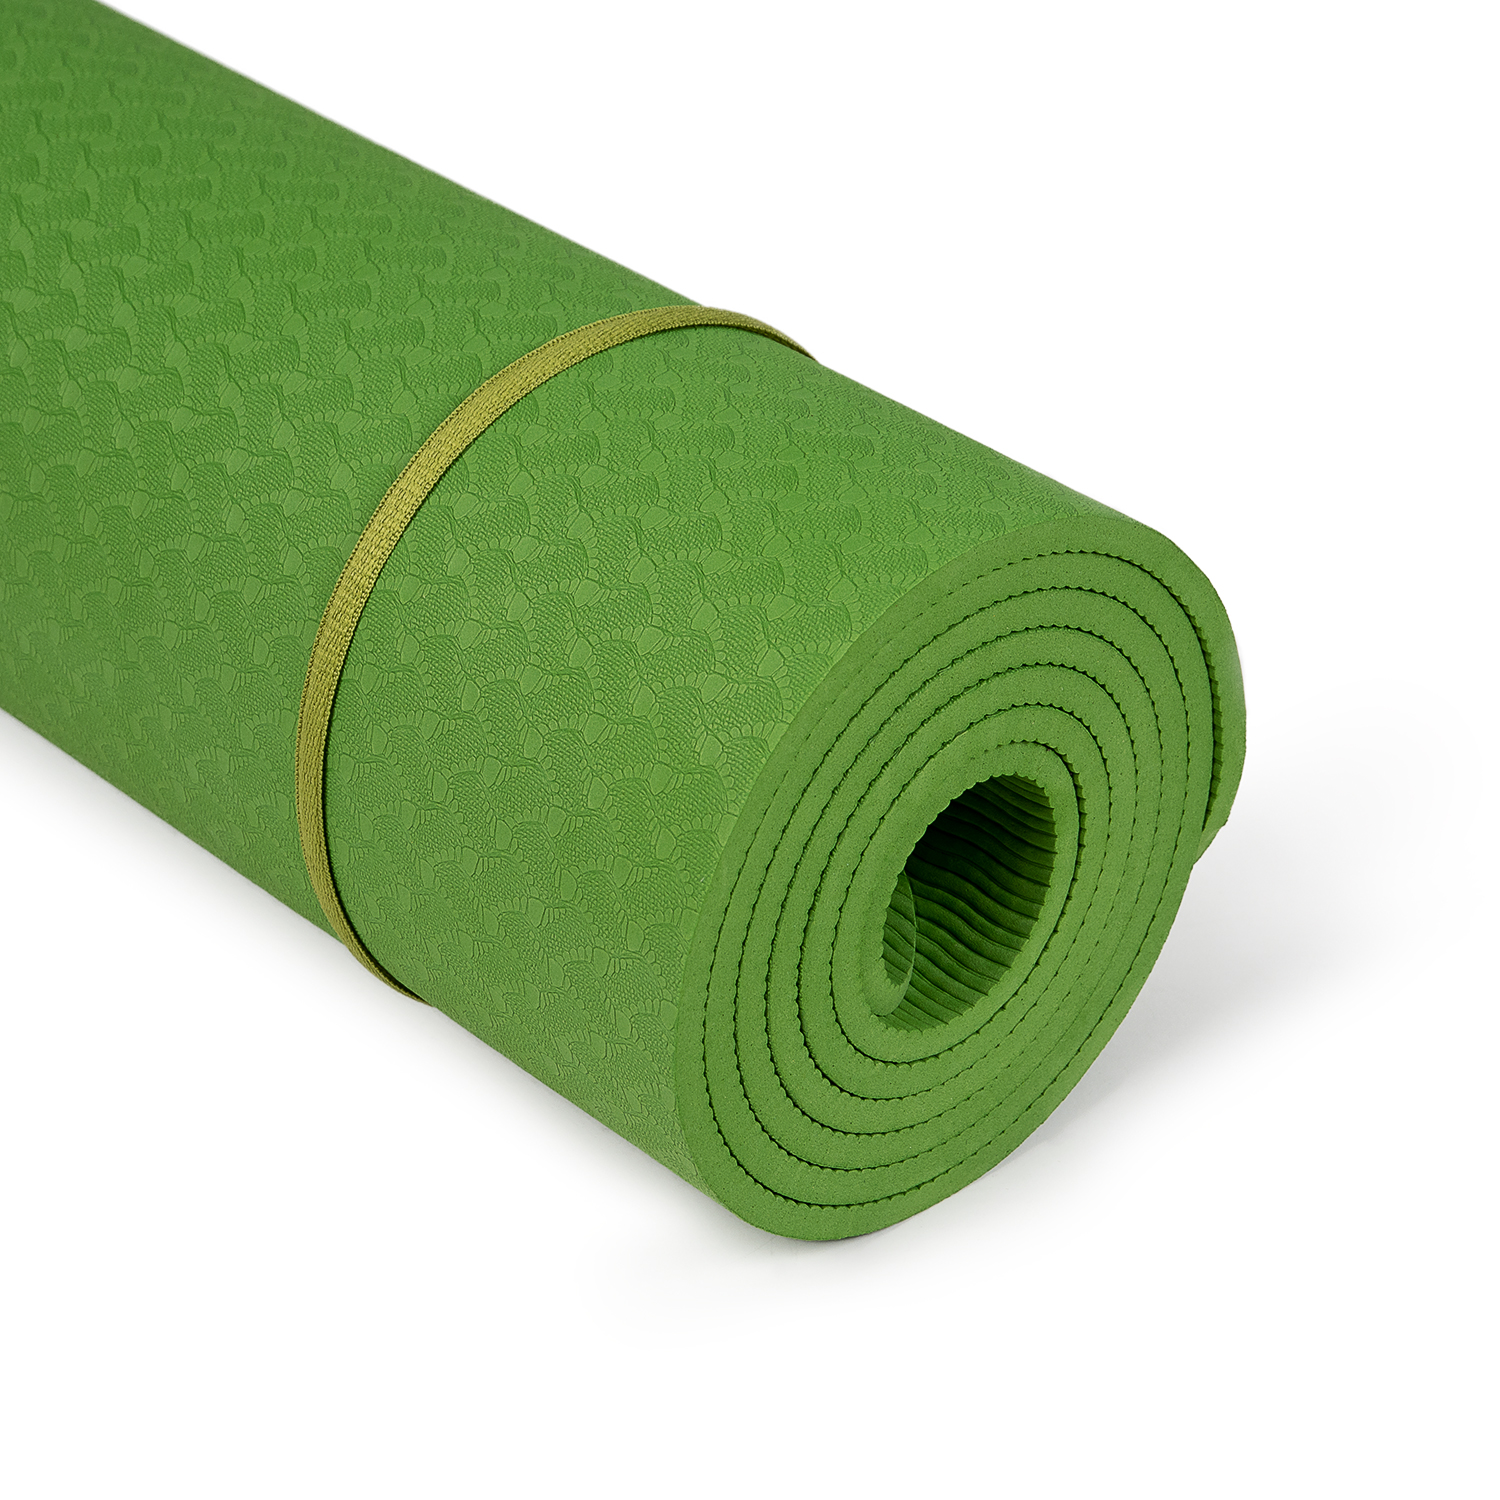 gazon schilder meubilair Yogamat groen 1830x610x6mm | Rubbermagazijn